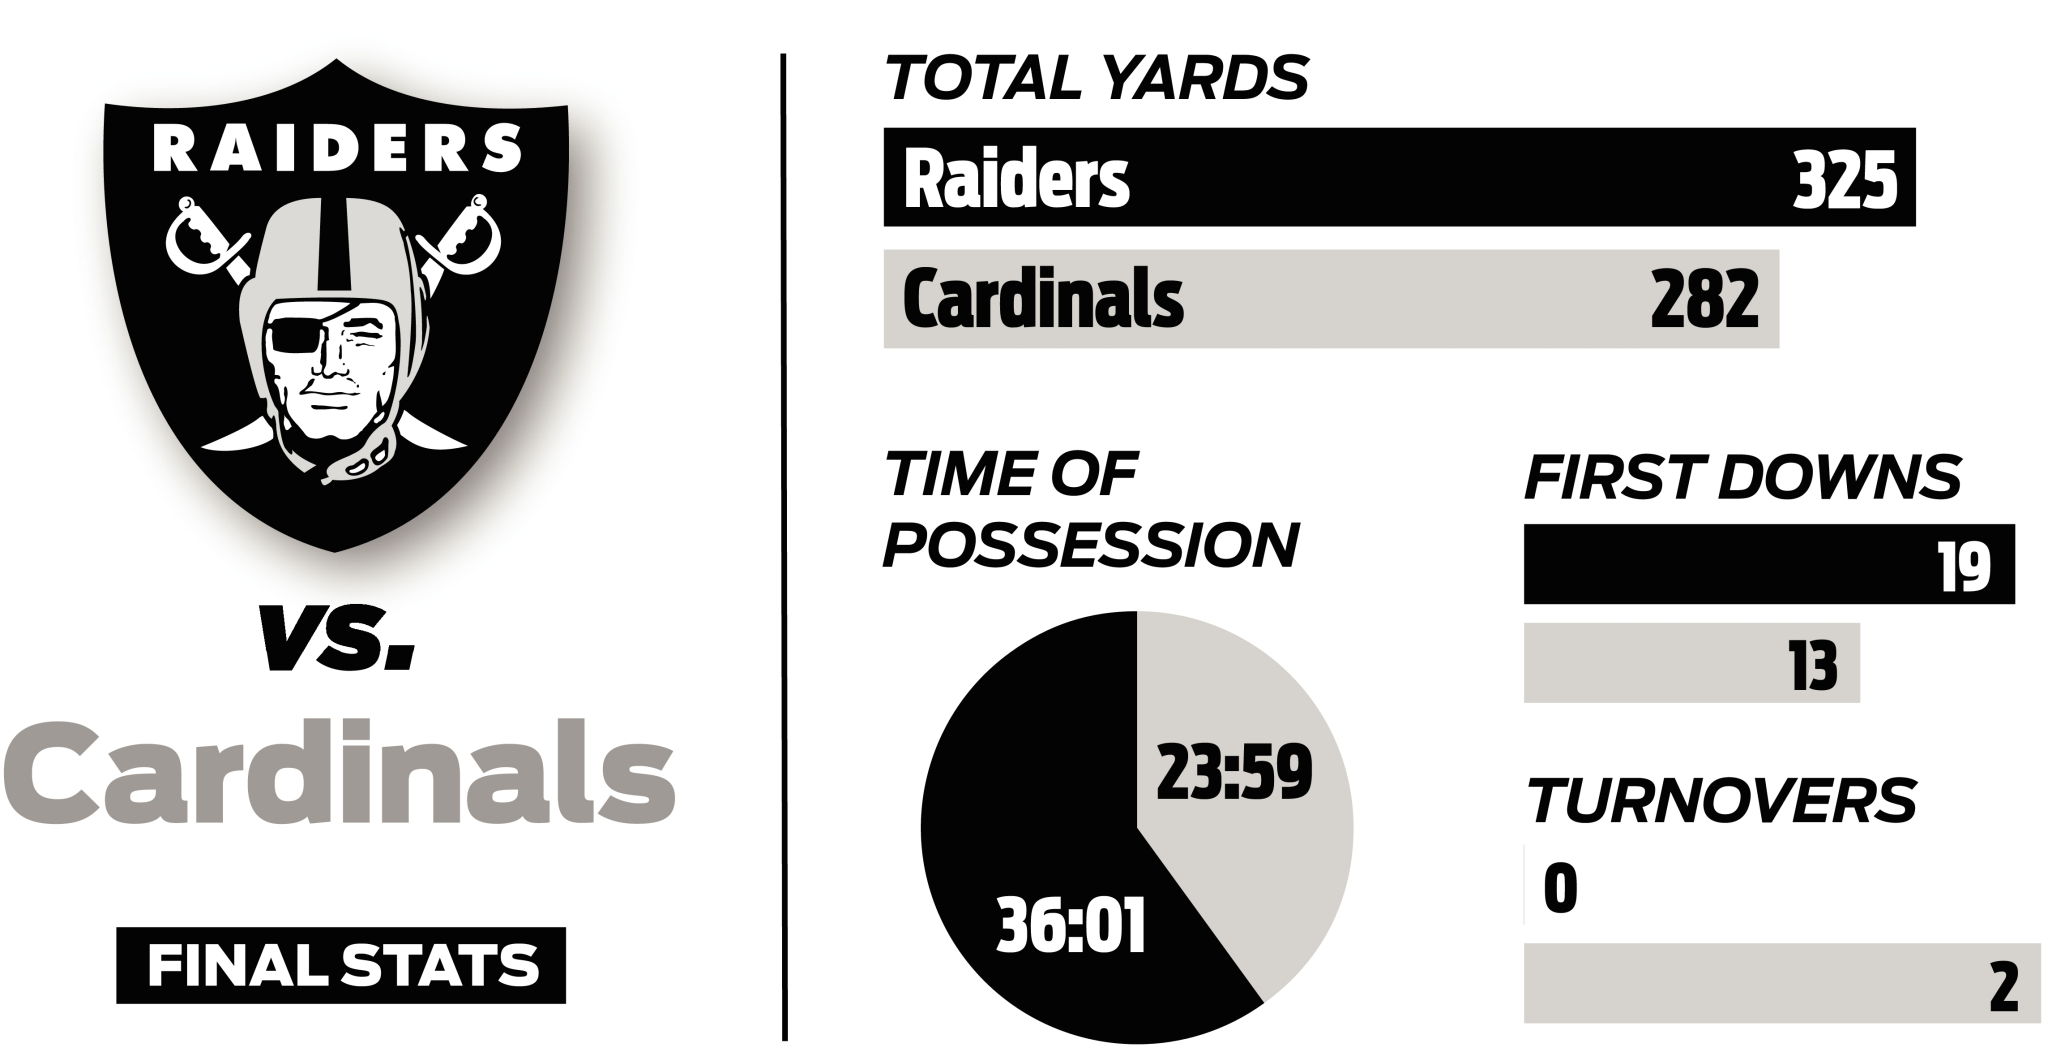 Stats and facts for Raiders, at Arizona